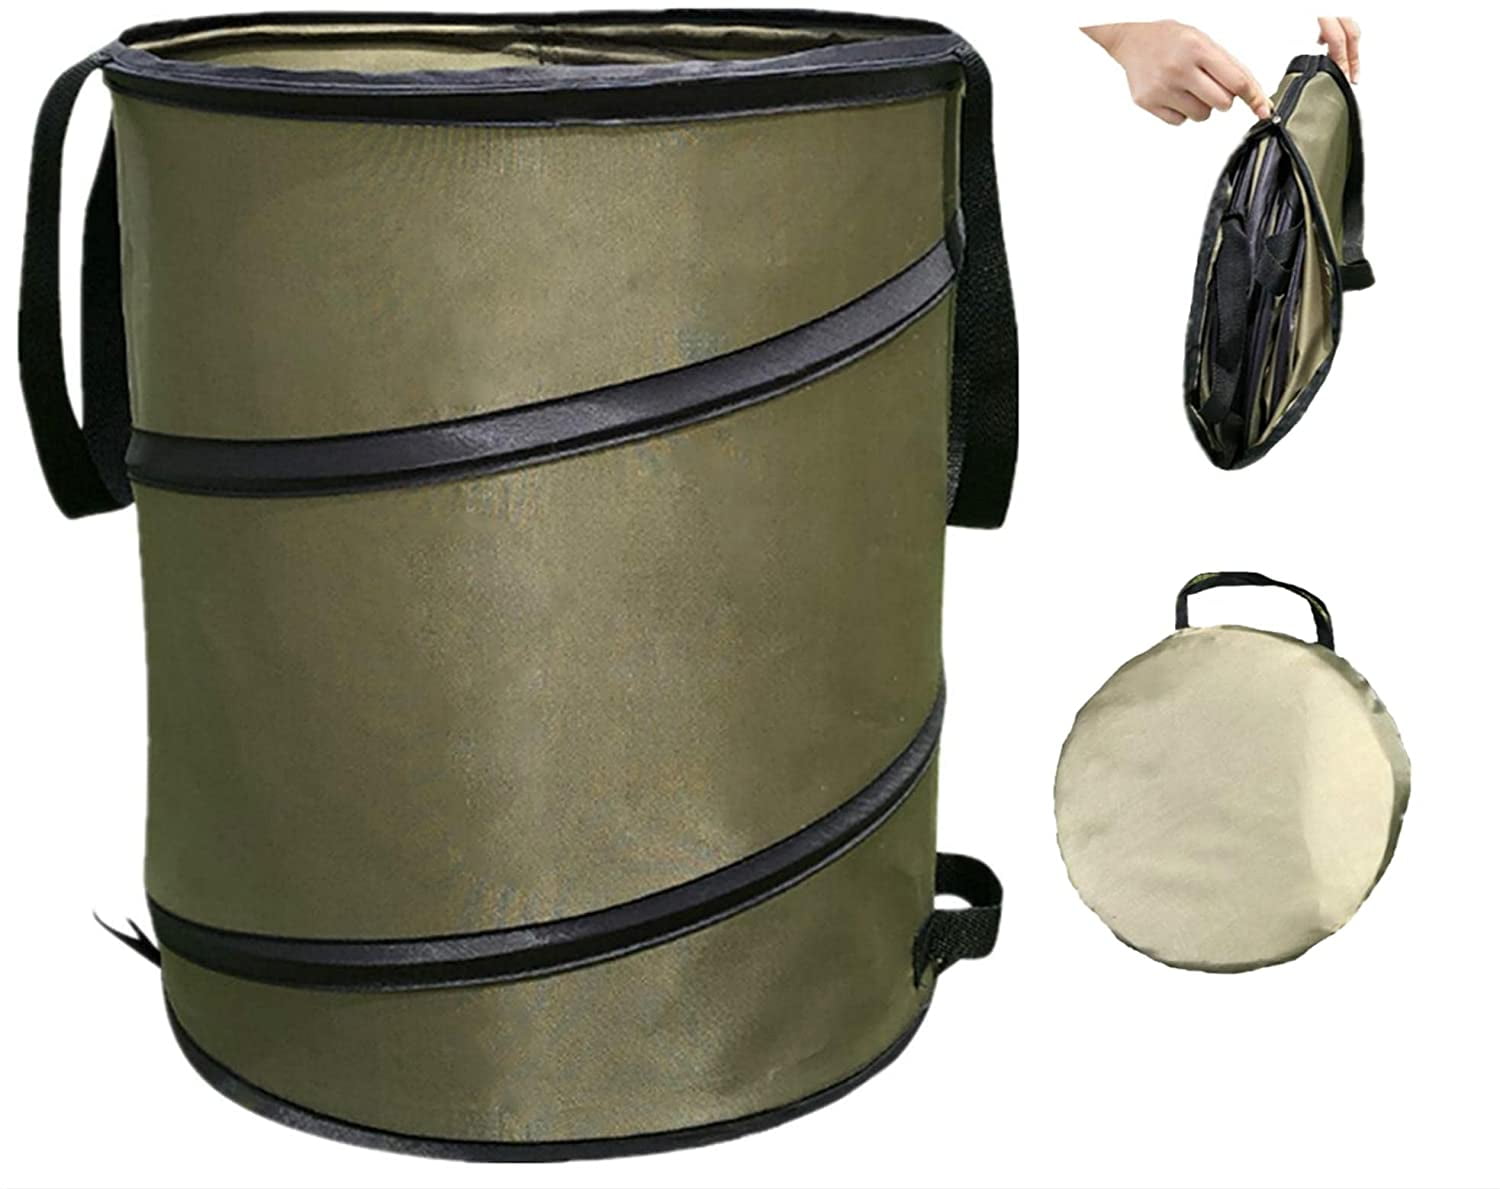 16.4 x 15.5 Black/Orange The Elixir Deco 10 gallon Gardening Bag Pop Up Collapsible Yard/Lawn Leaf Refuse Bag Container 